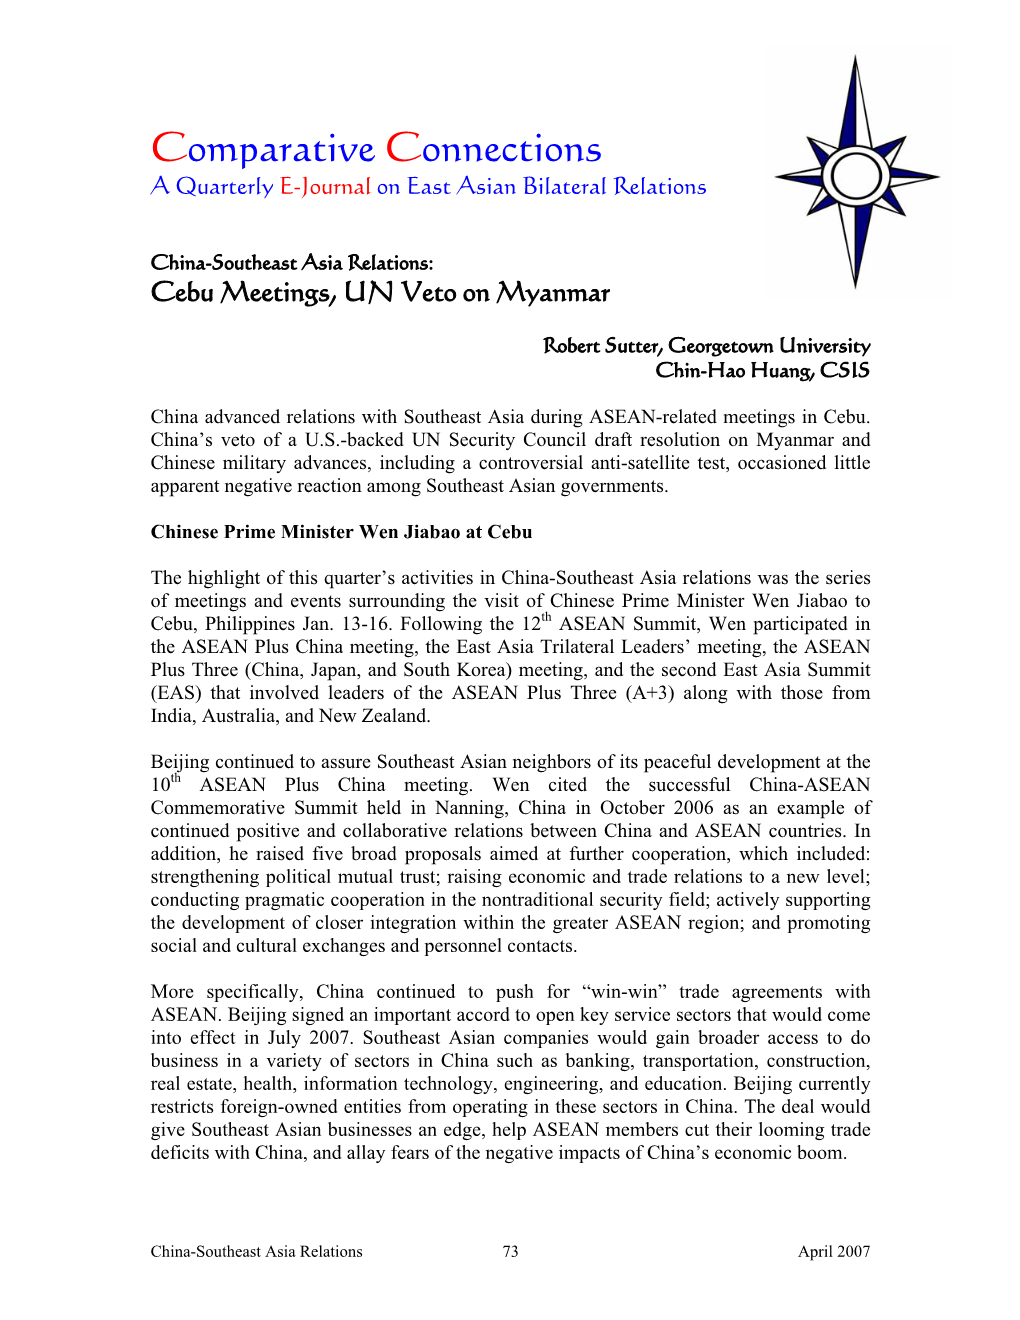 Cebu Meetings, UN Veto on Myanmar -- Comparative Connections